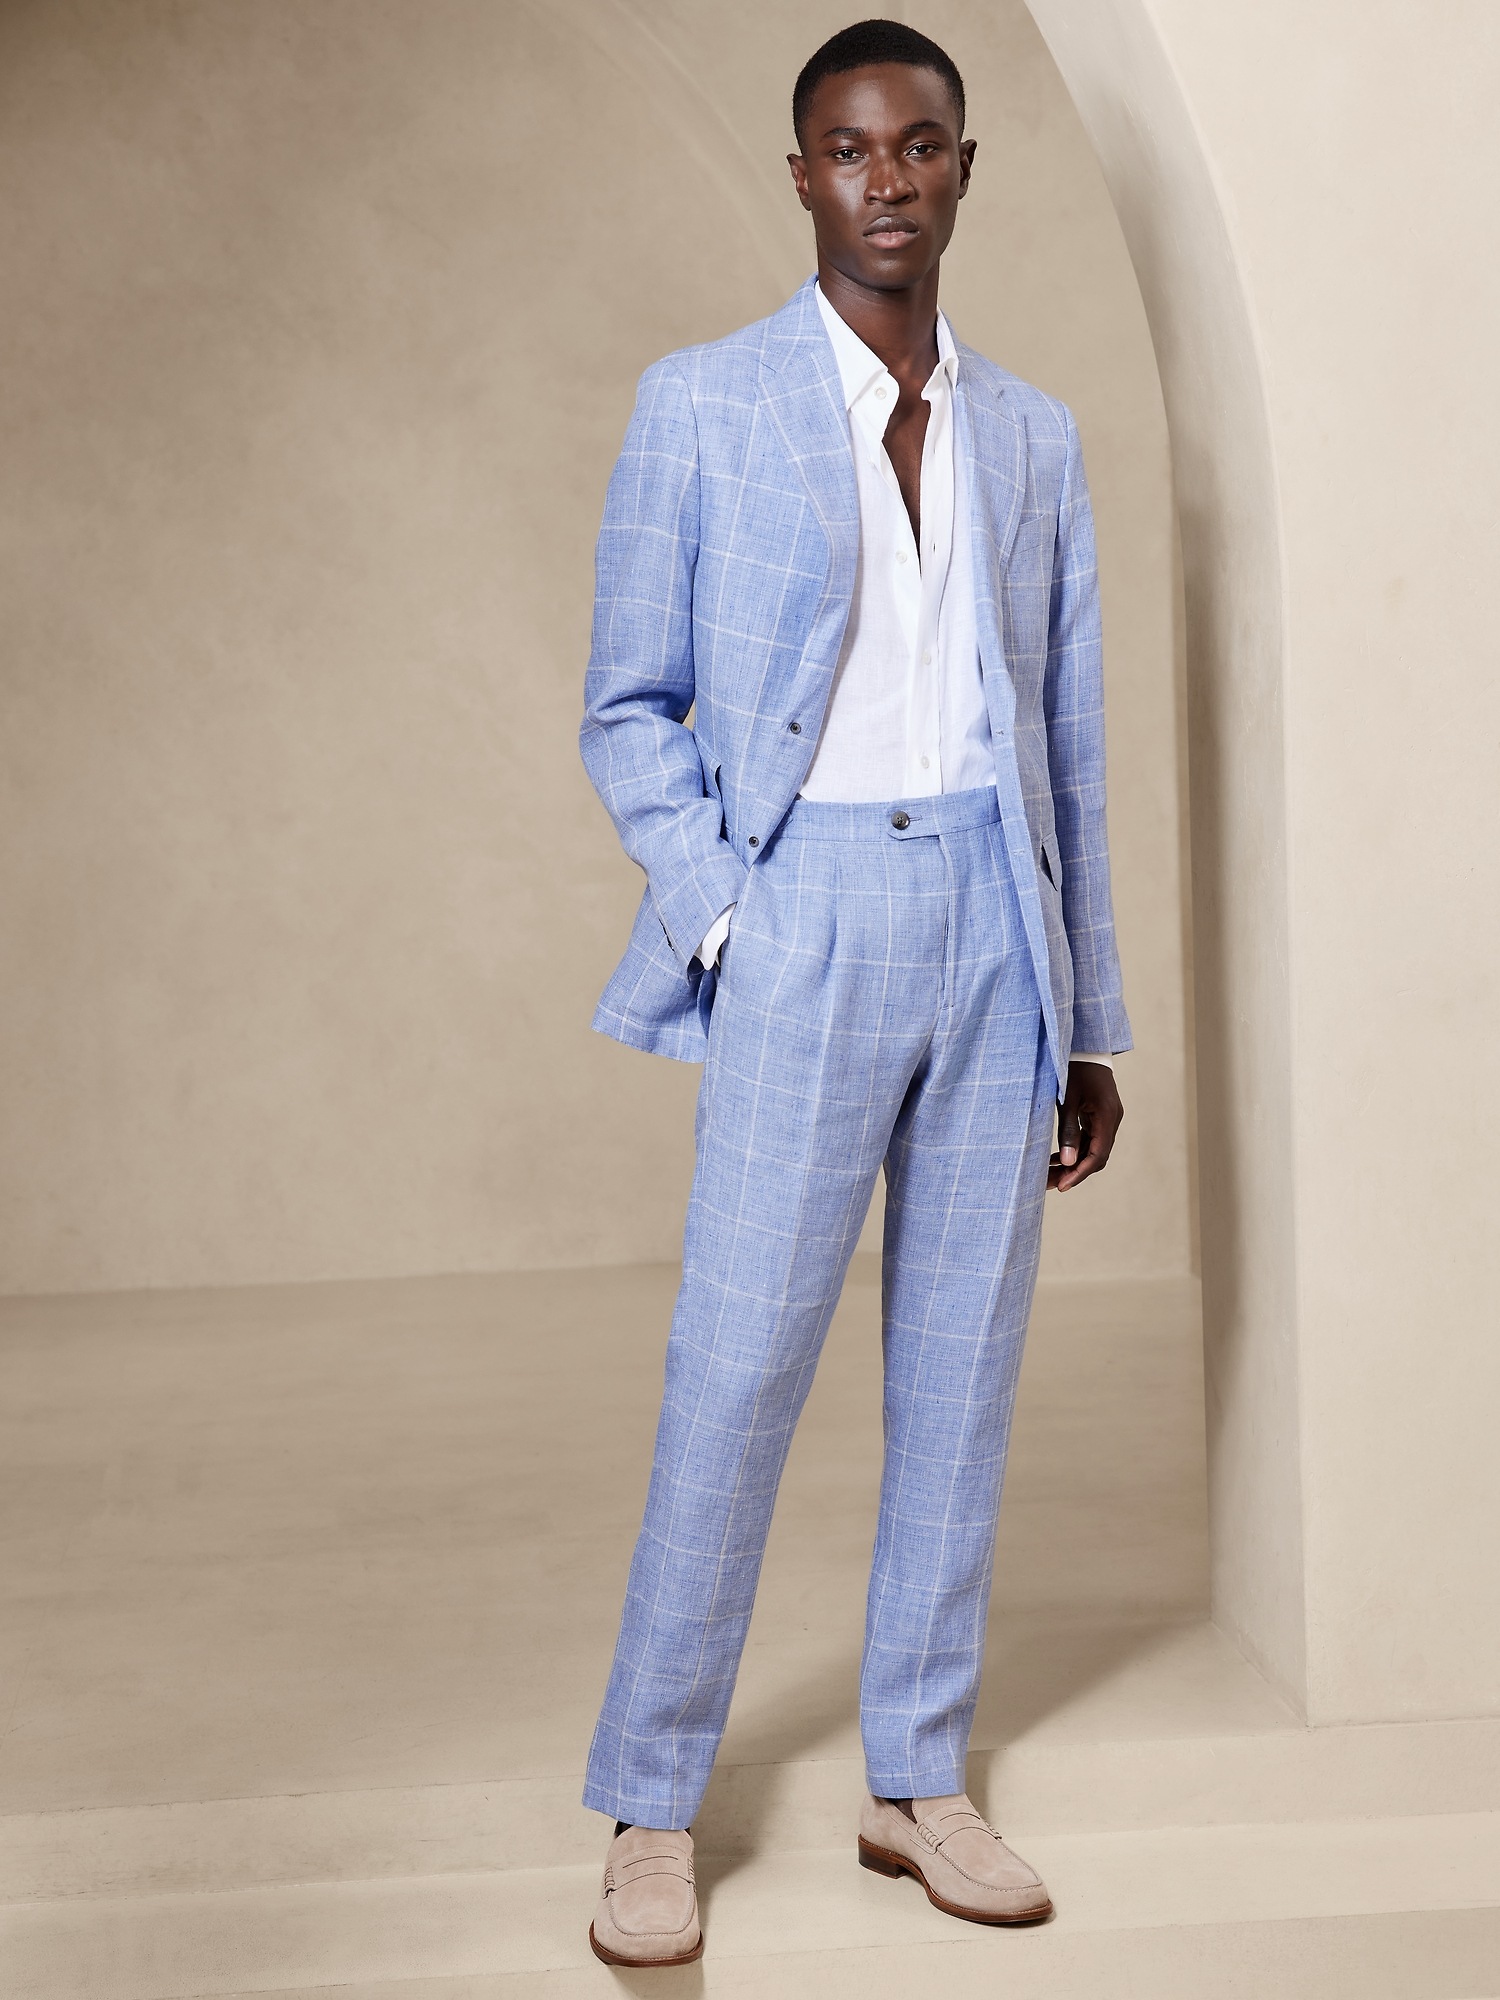 Men's Sky Blue Textured Wool and Linen Blazer Jacket